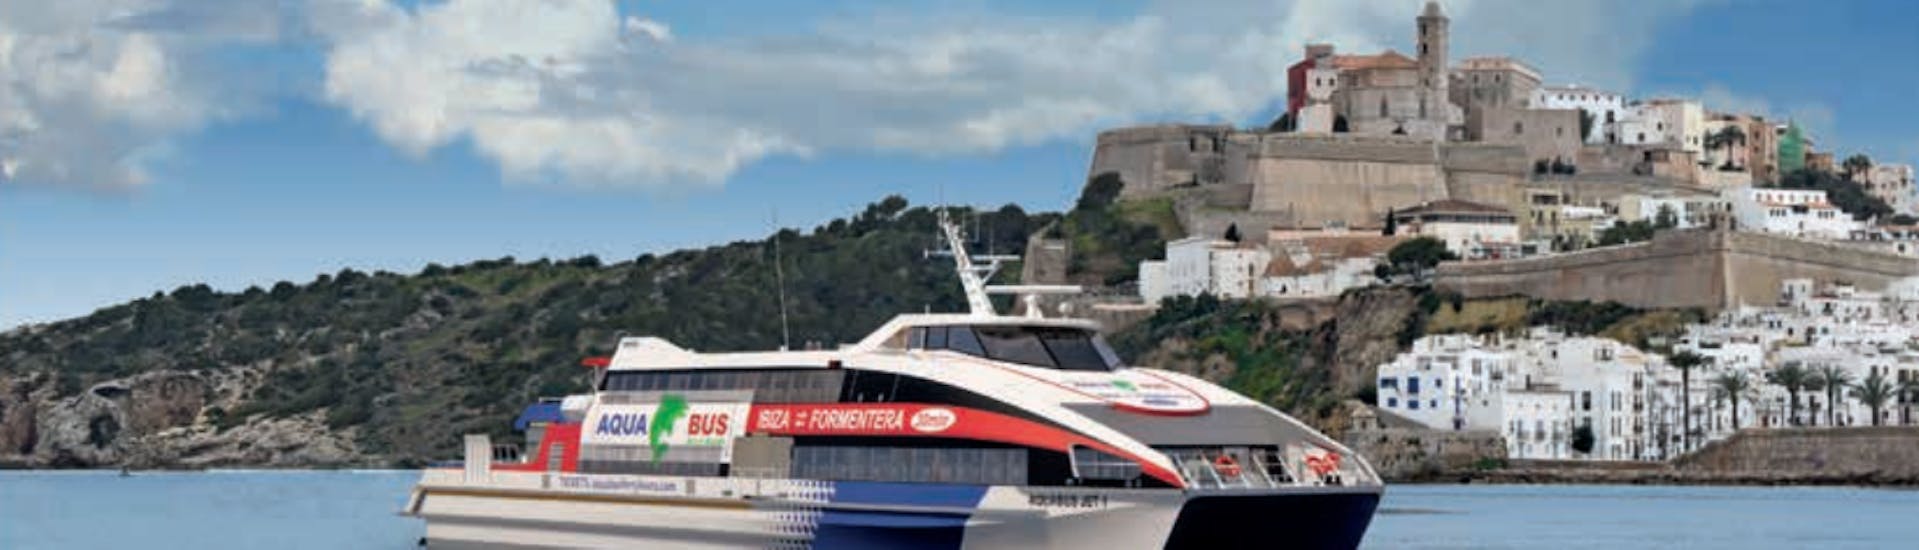 Balade en bateau La Savina (Formentera) - Ibiza Ville  & Visites touristiques.